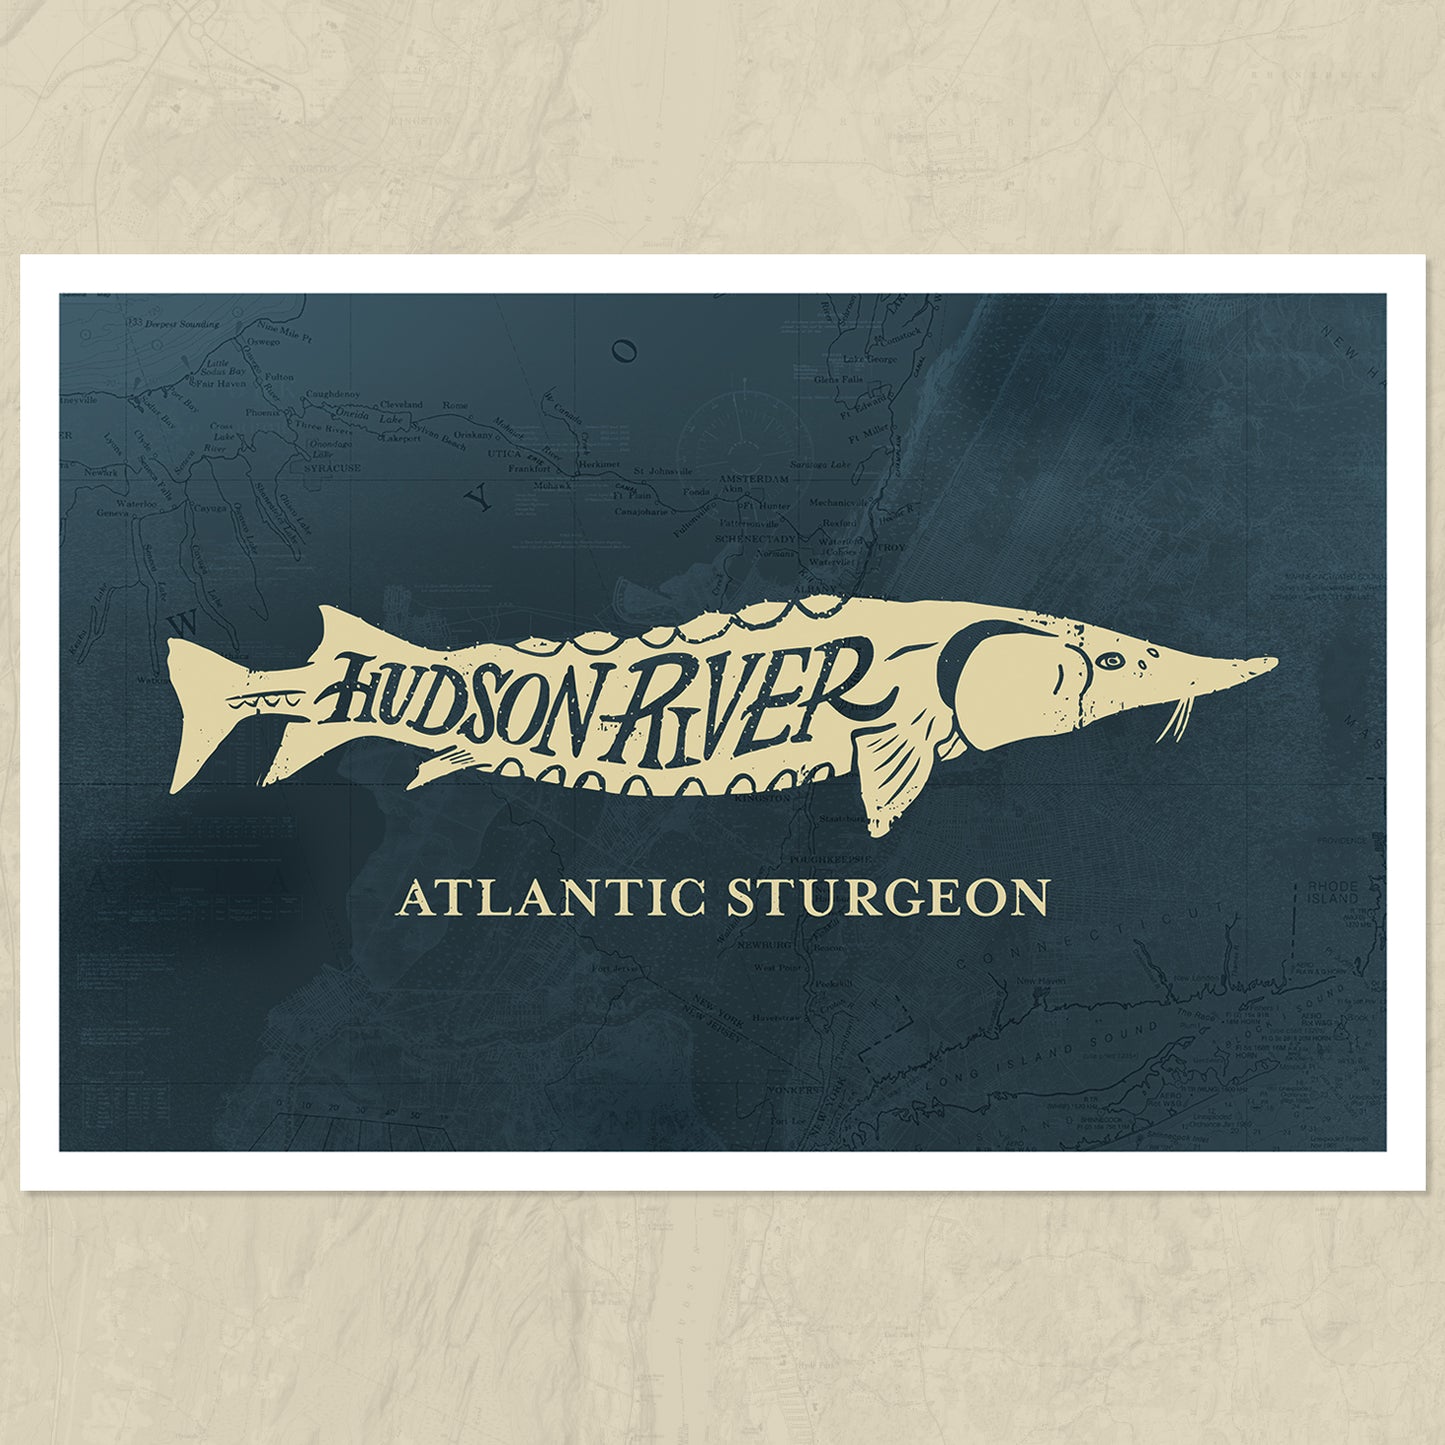 Atlantic Sturgeon